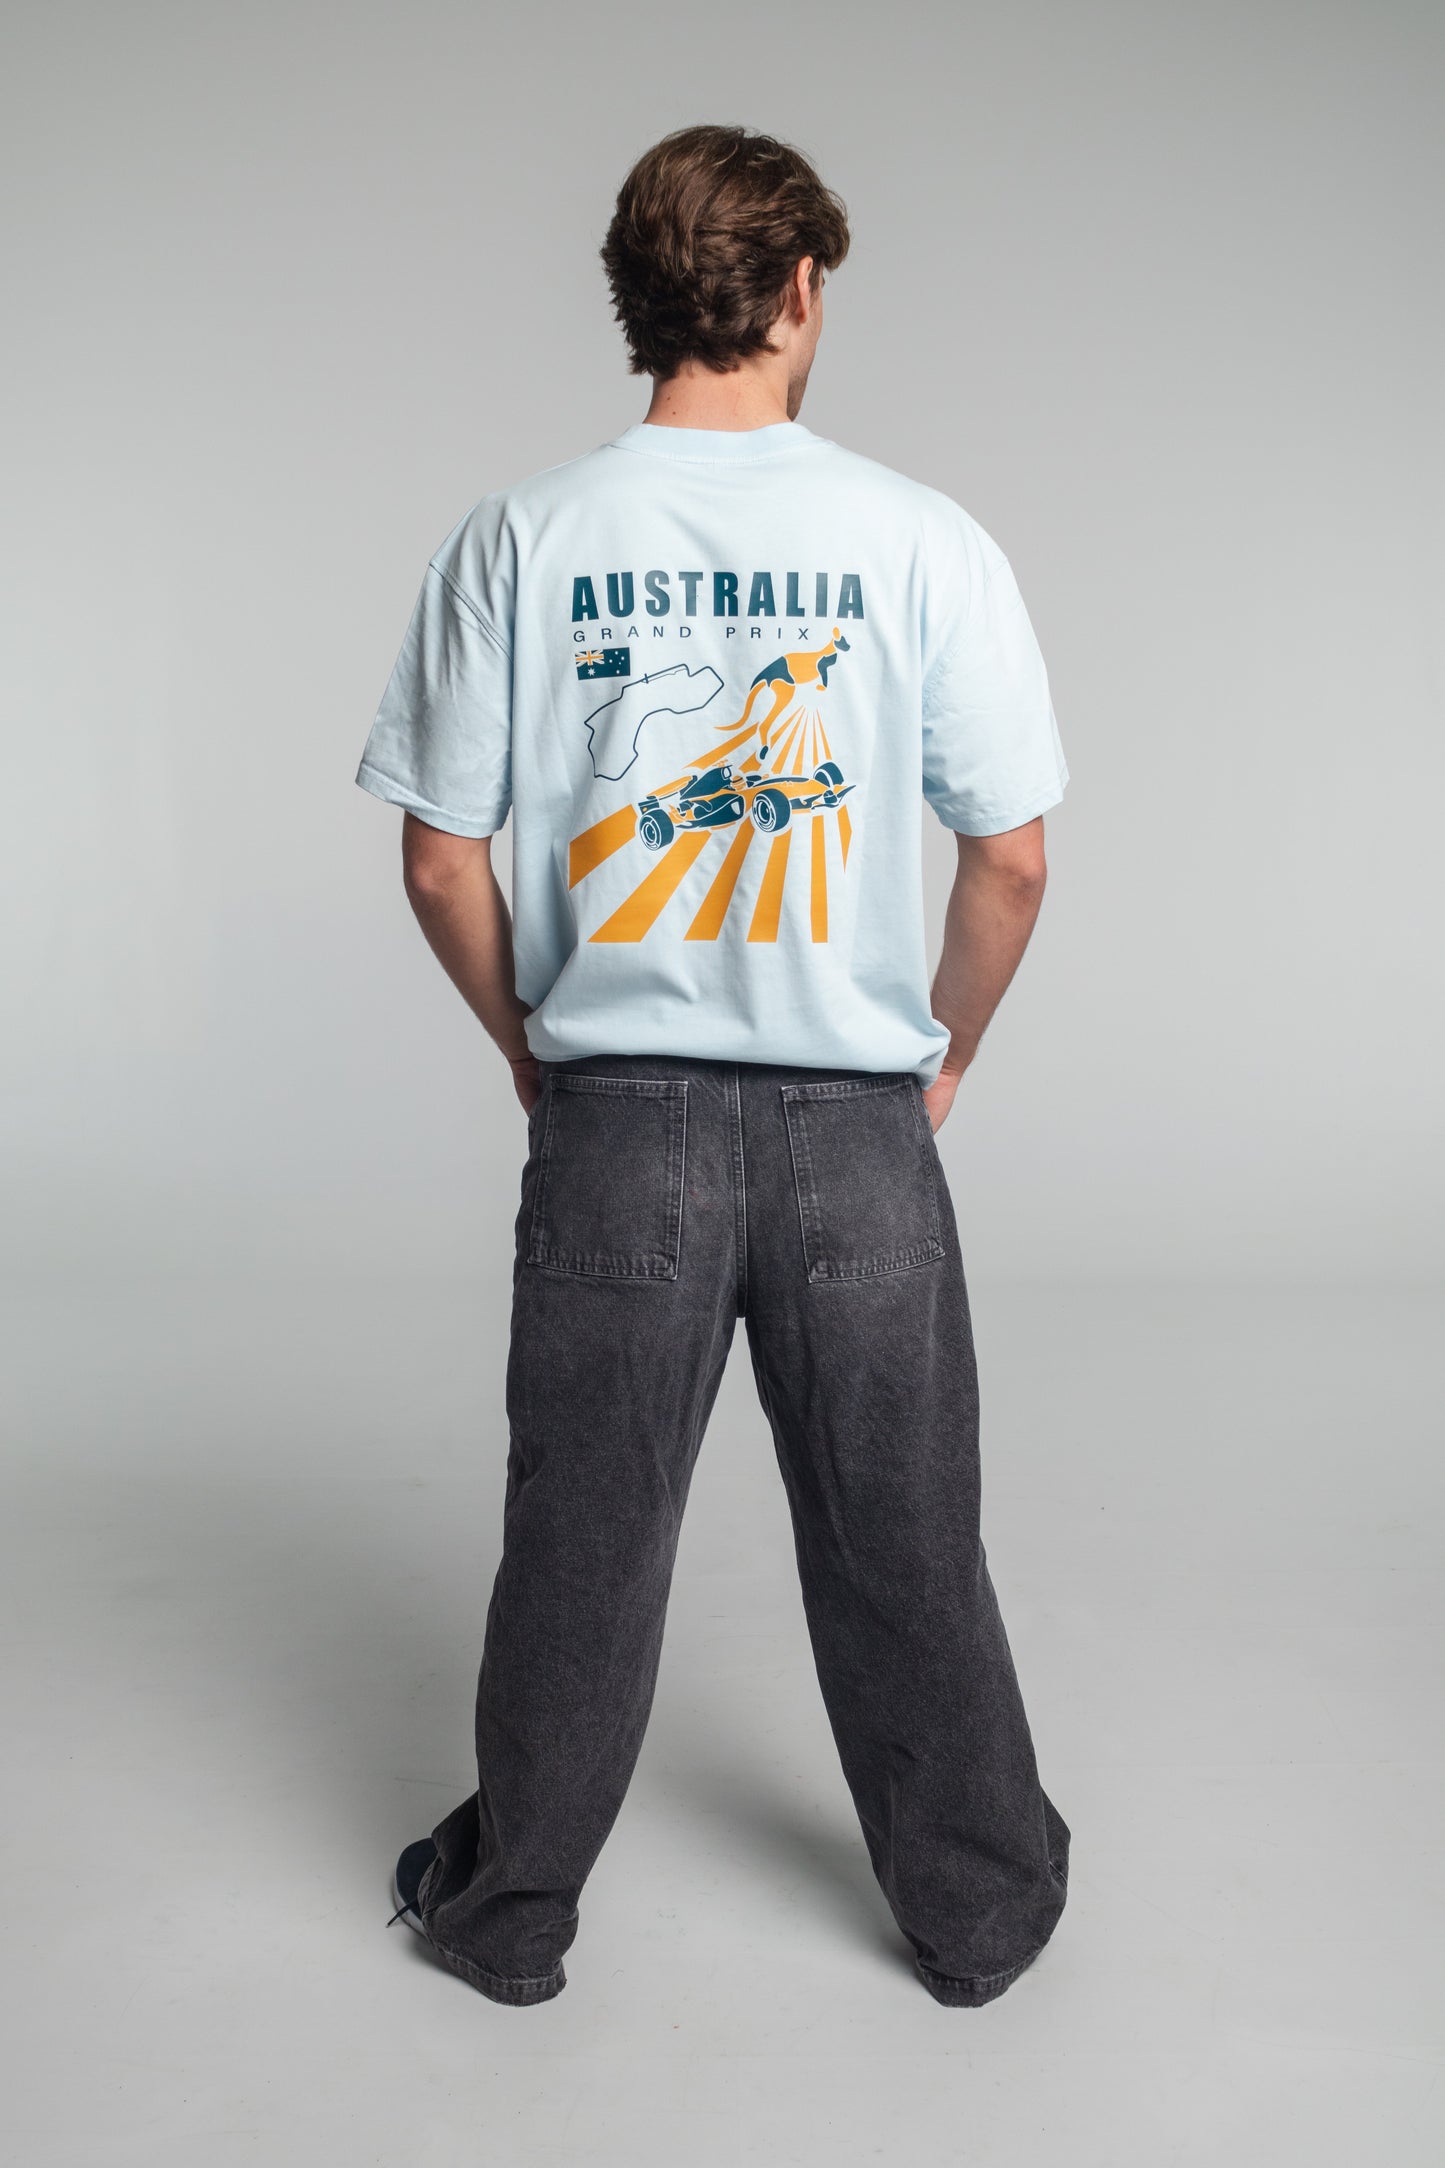 Camiseta "Australia GP" Formula 1 - Azul